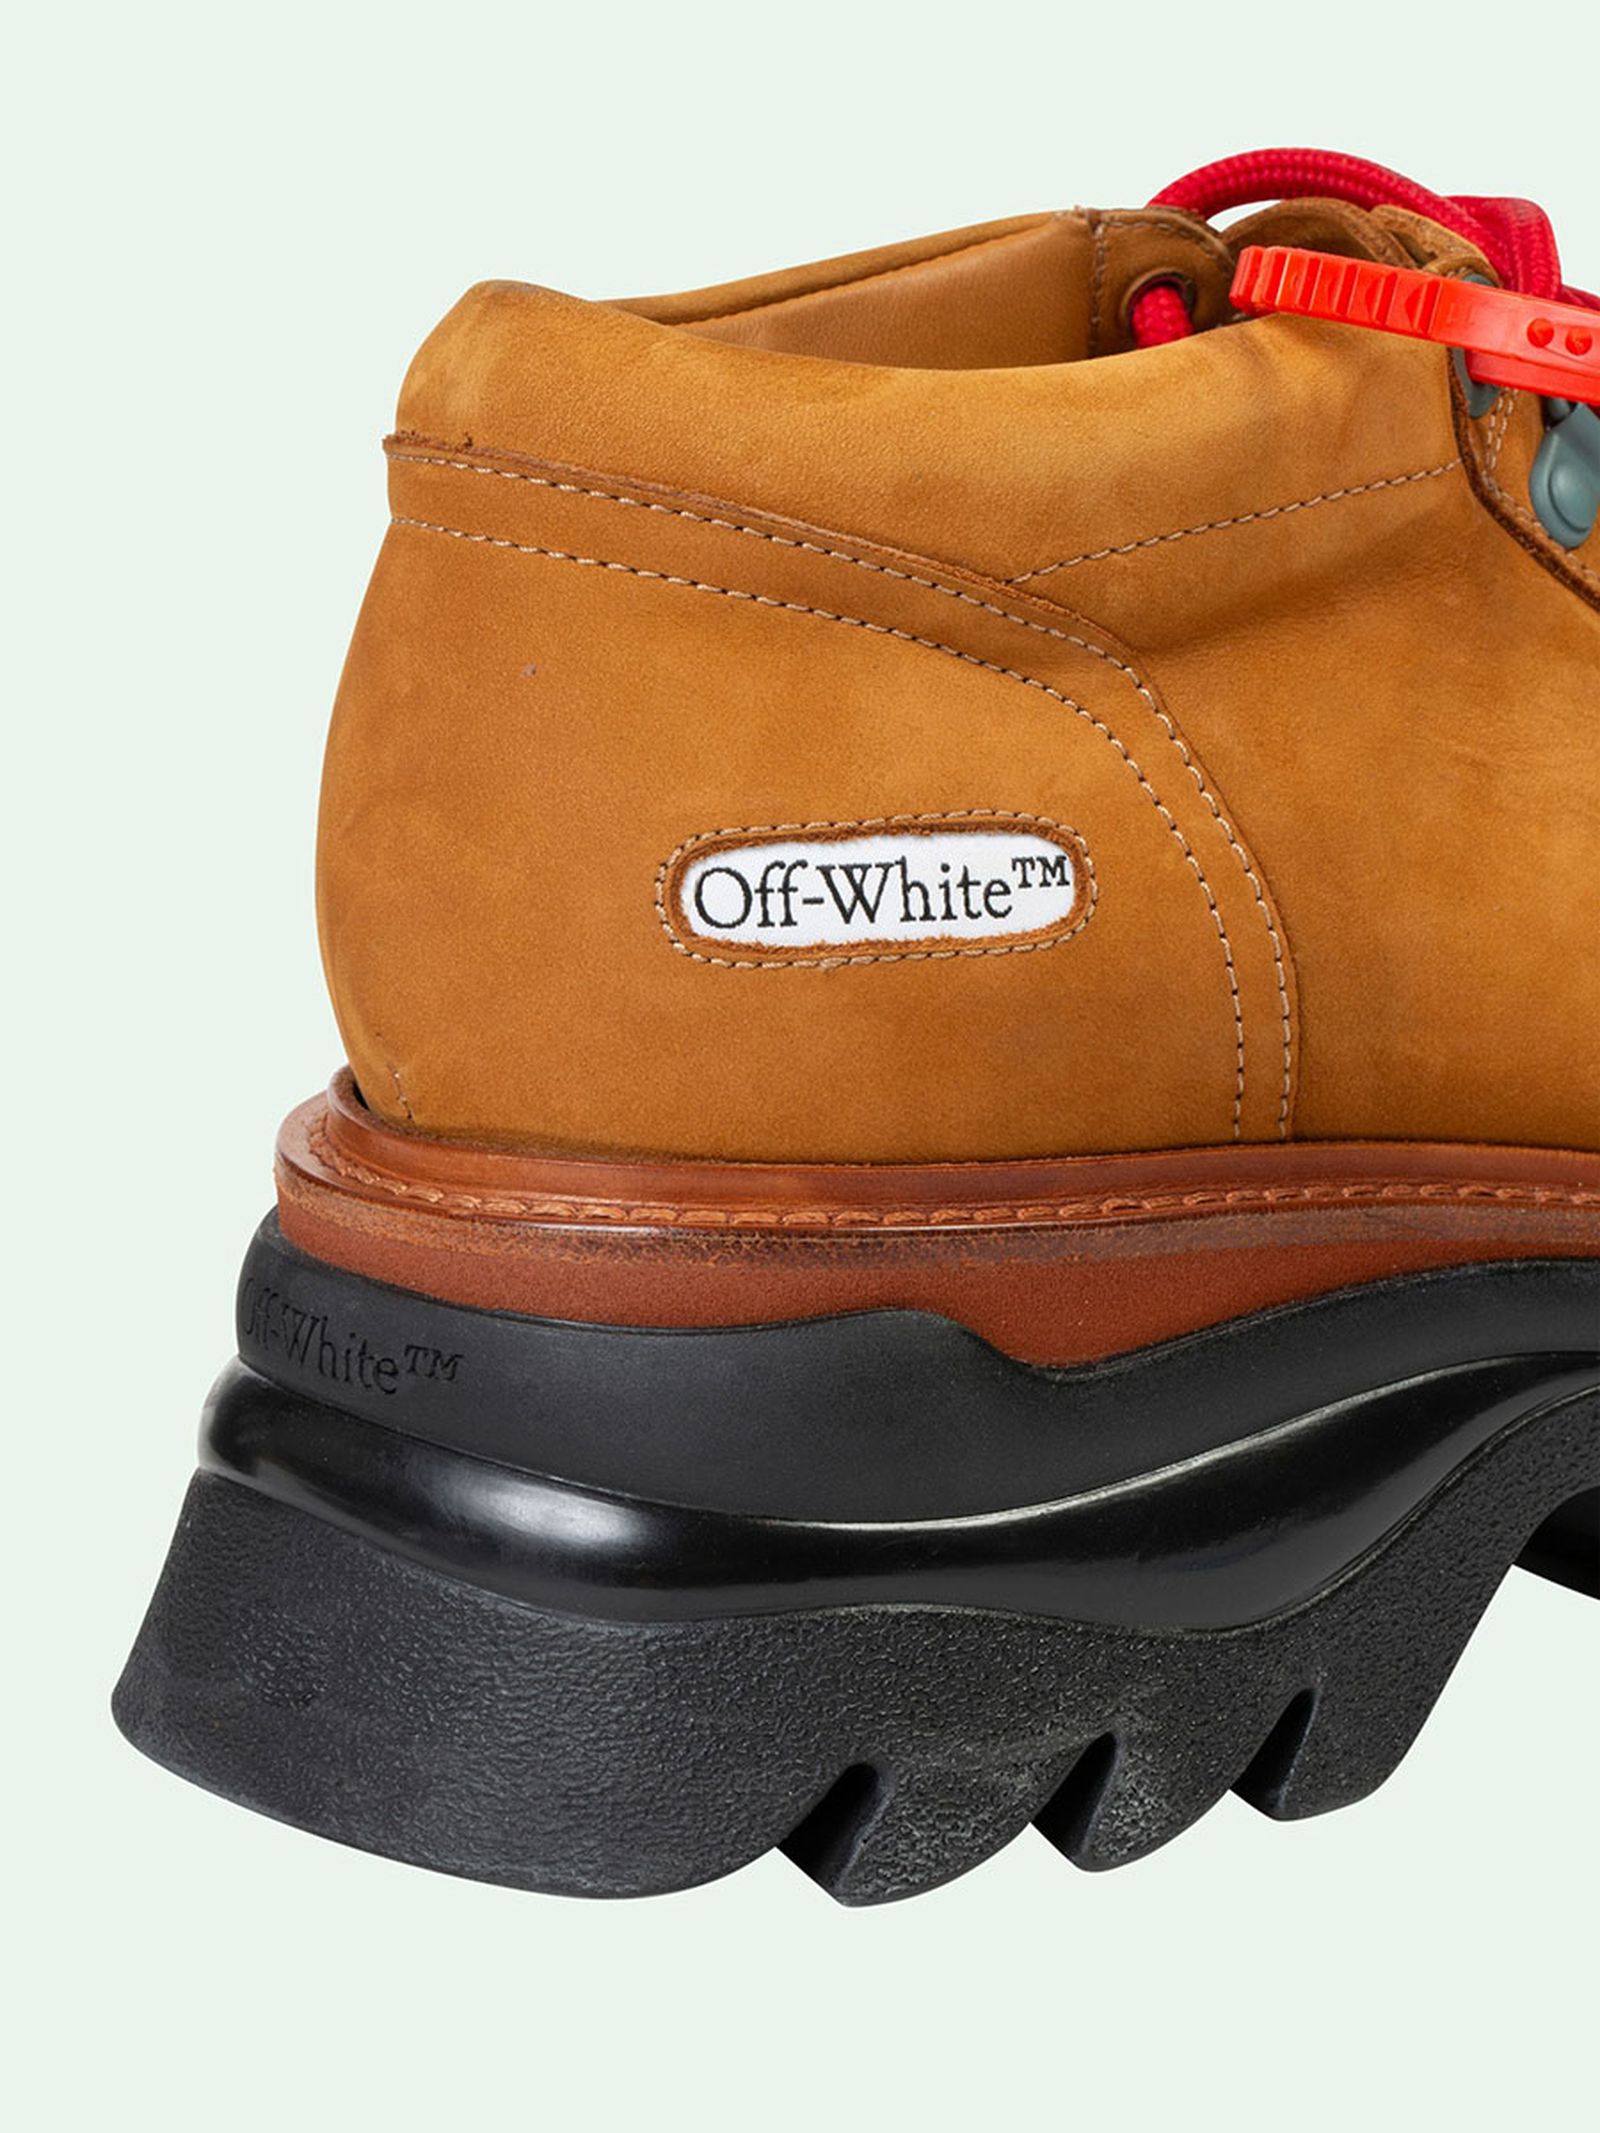 off-white-ridged-sole-sneaker-release-date-price-08